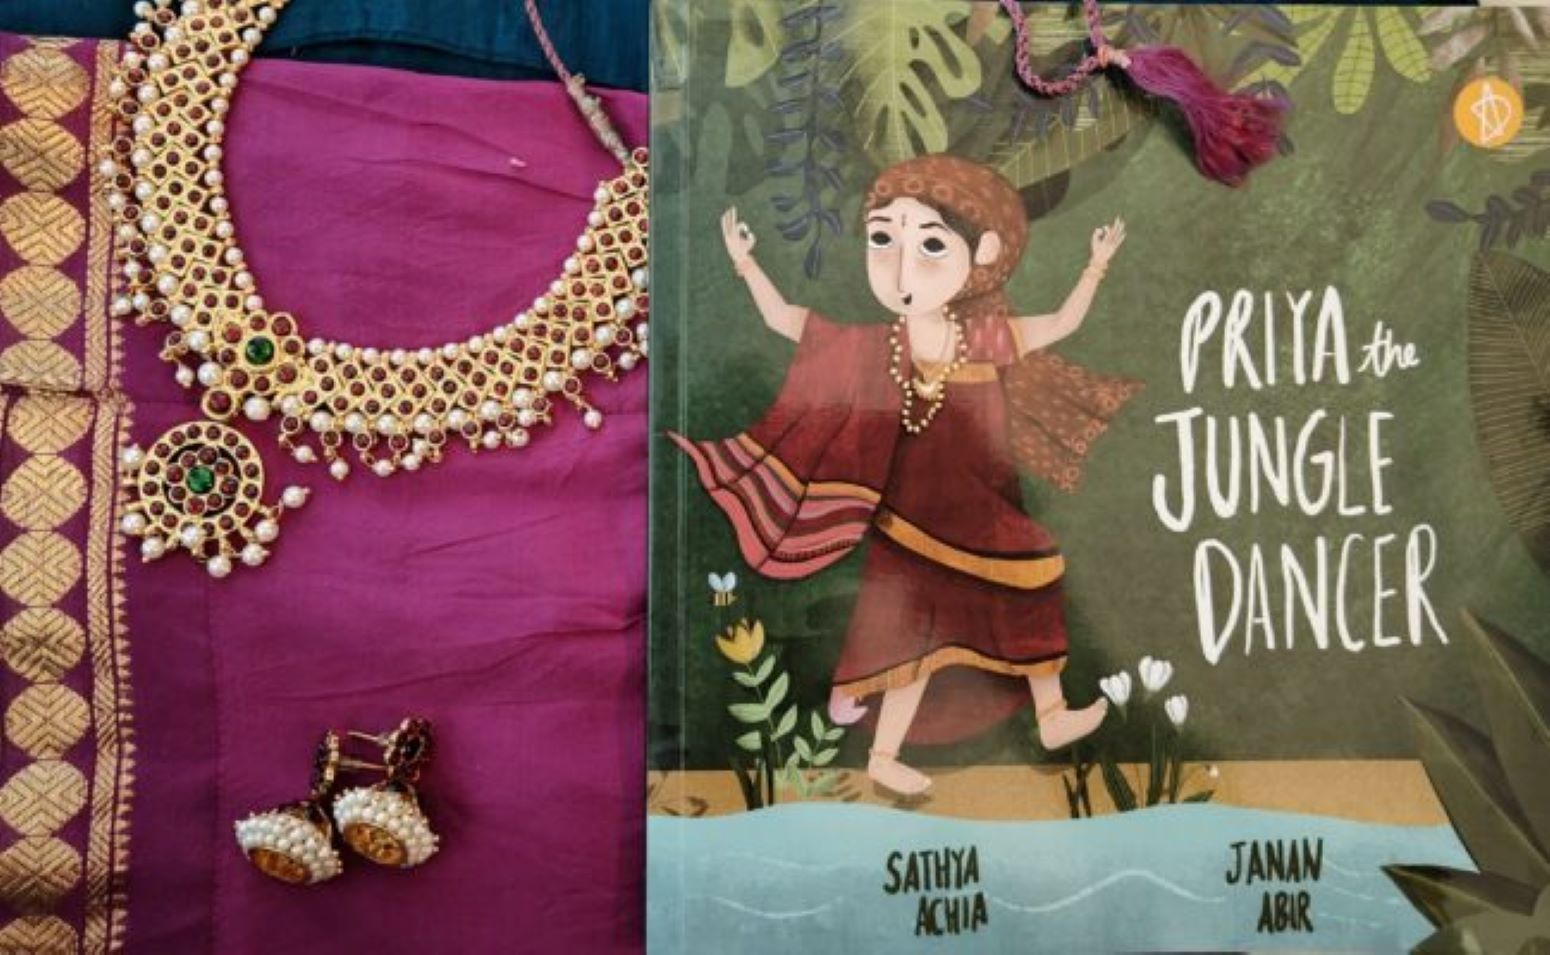 Can you Dance like Priya the Jungle Dancer? [Review]